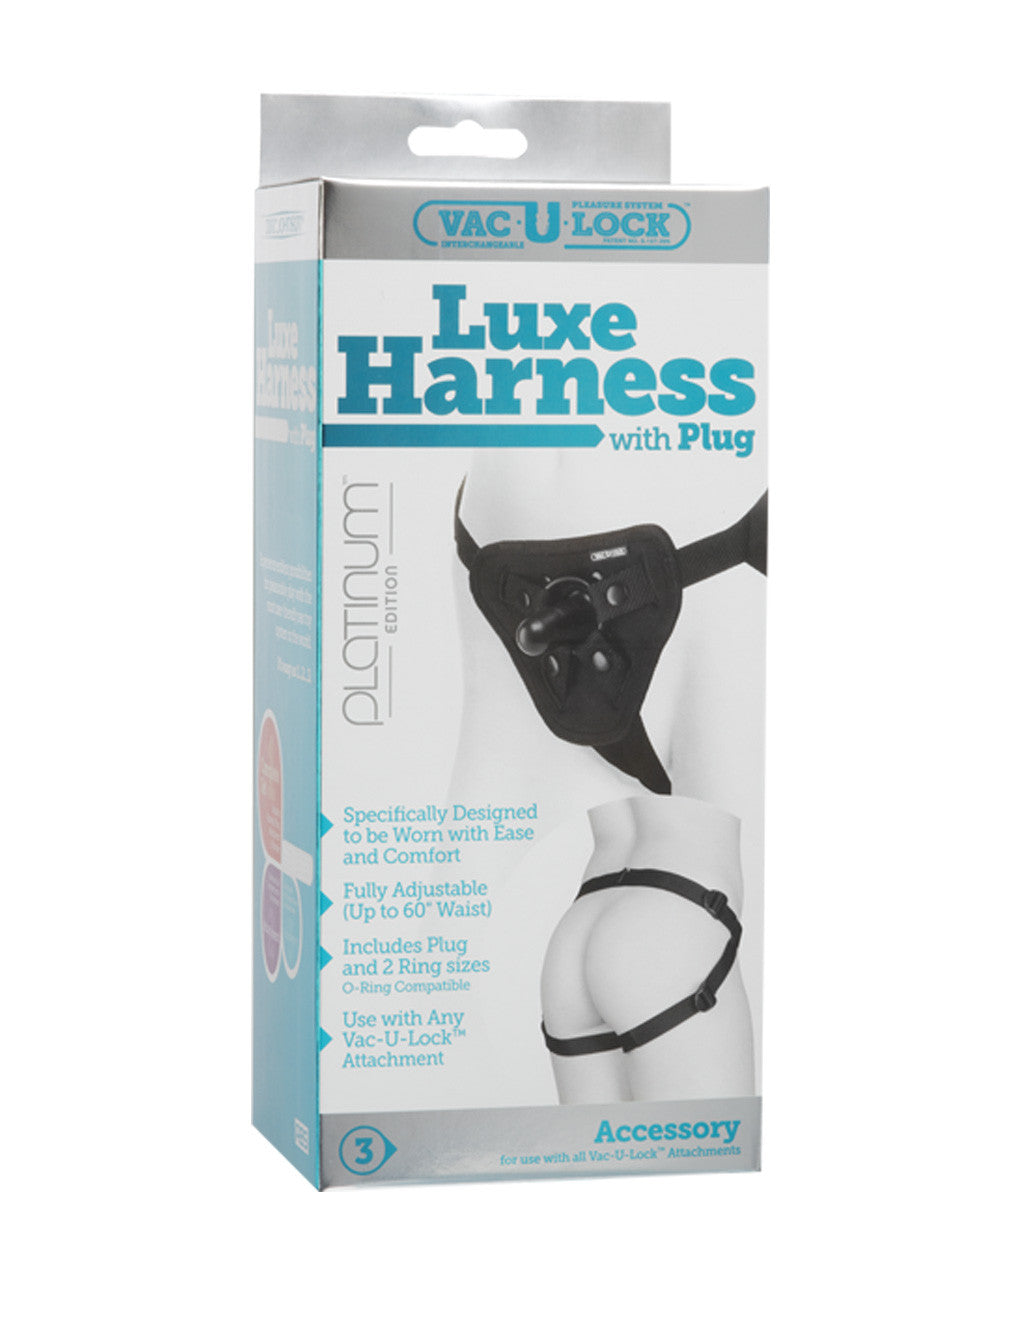 Vac-U-Lock Luxe Strap On Harness Package